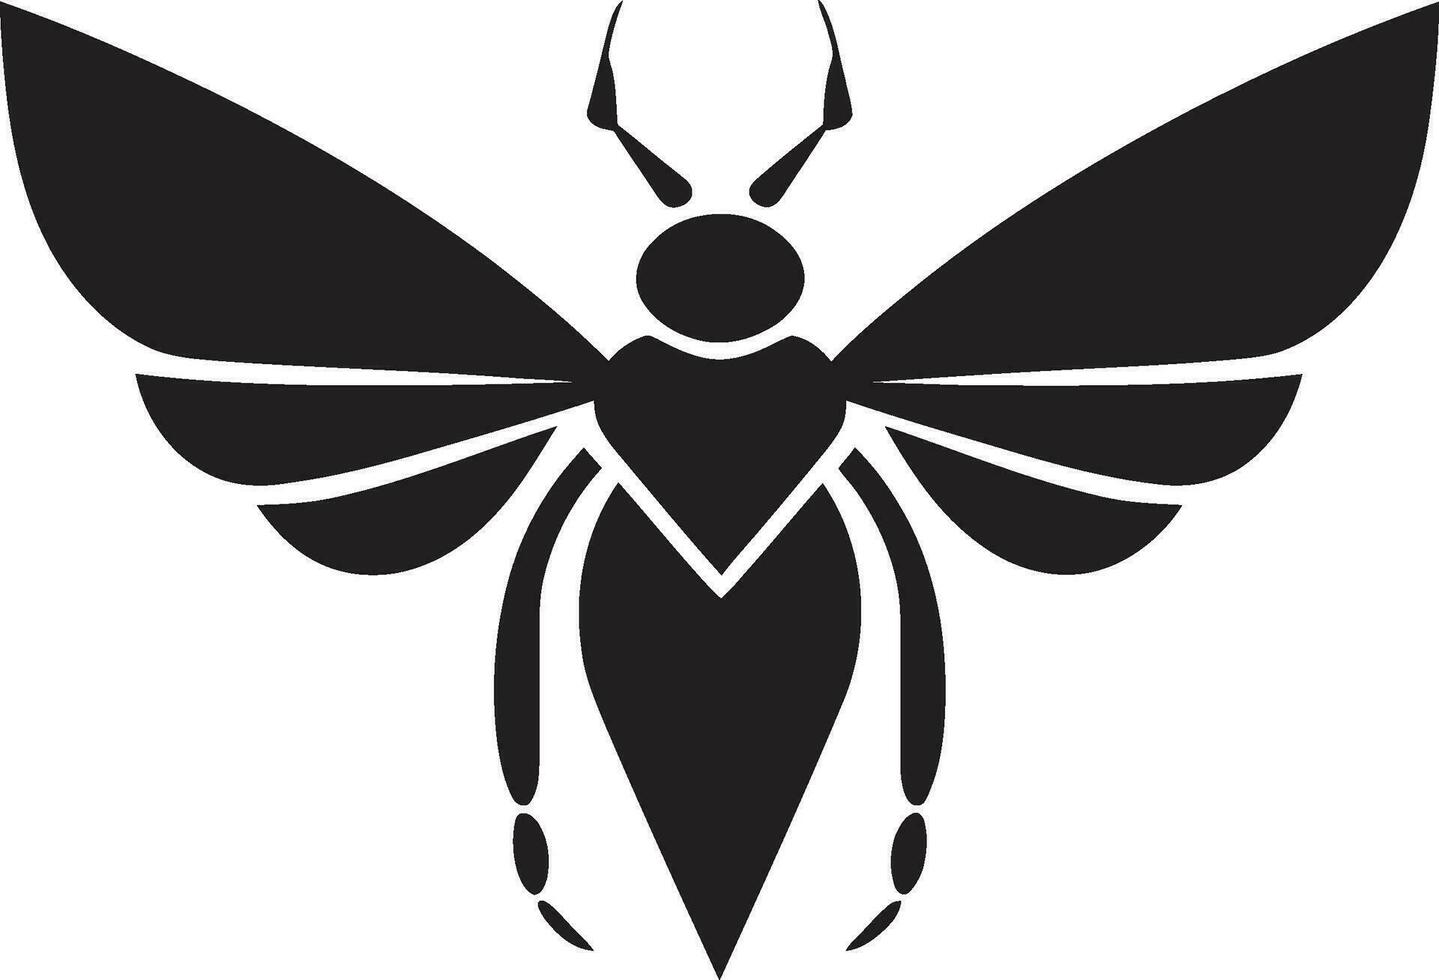 Beetle Dynasty Heraldry Sleek Black Beetle Insect Emblem vector